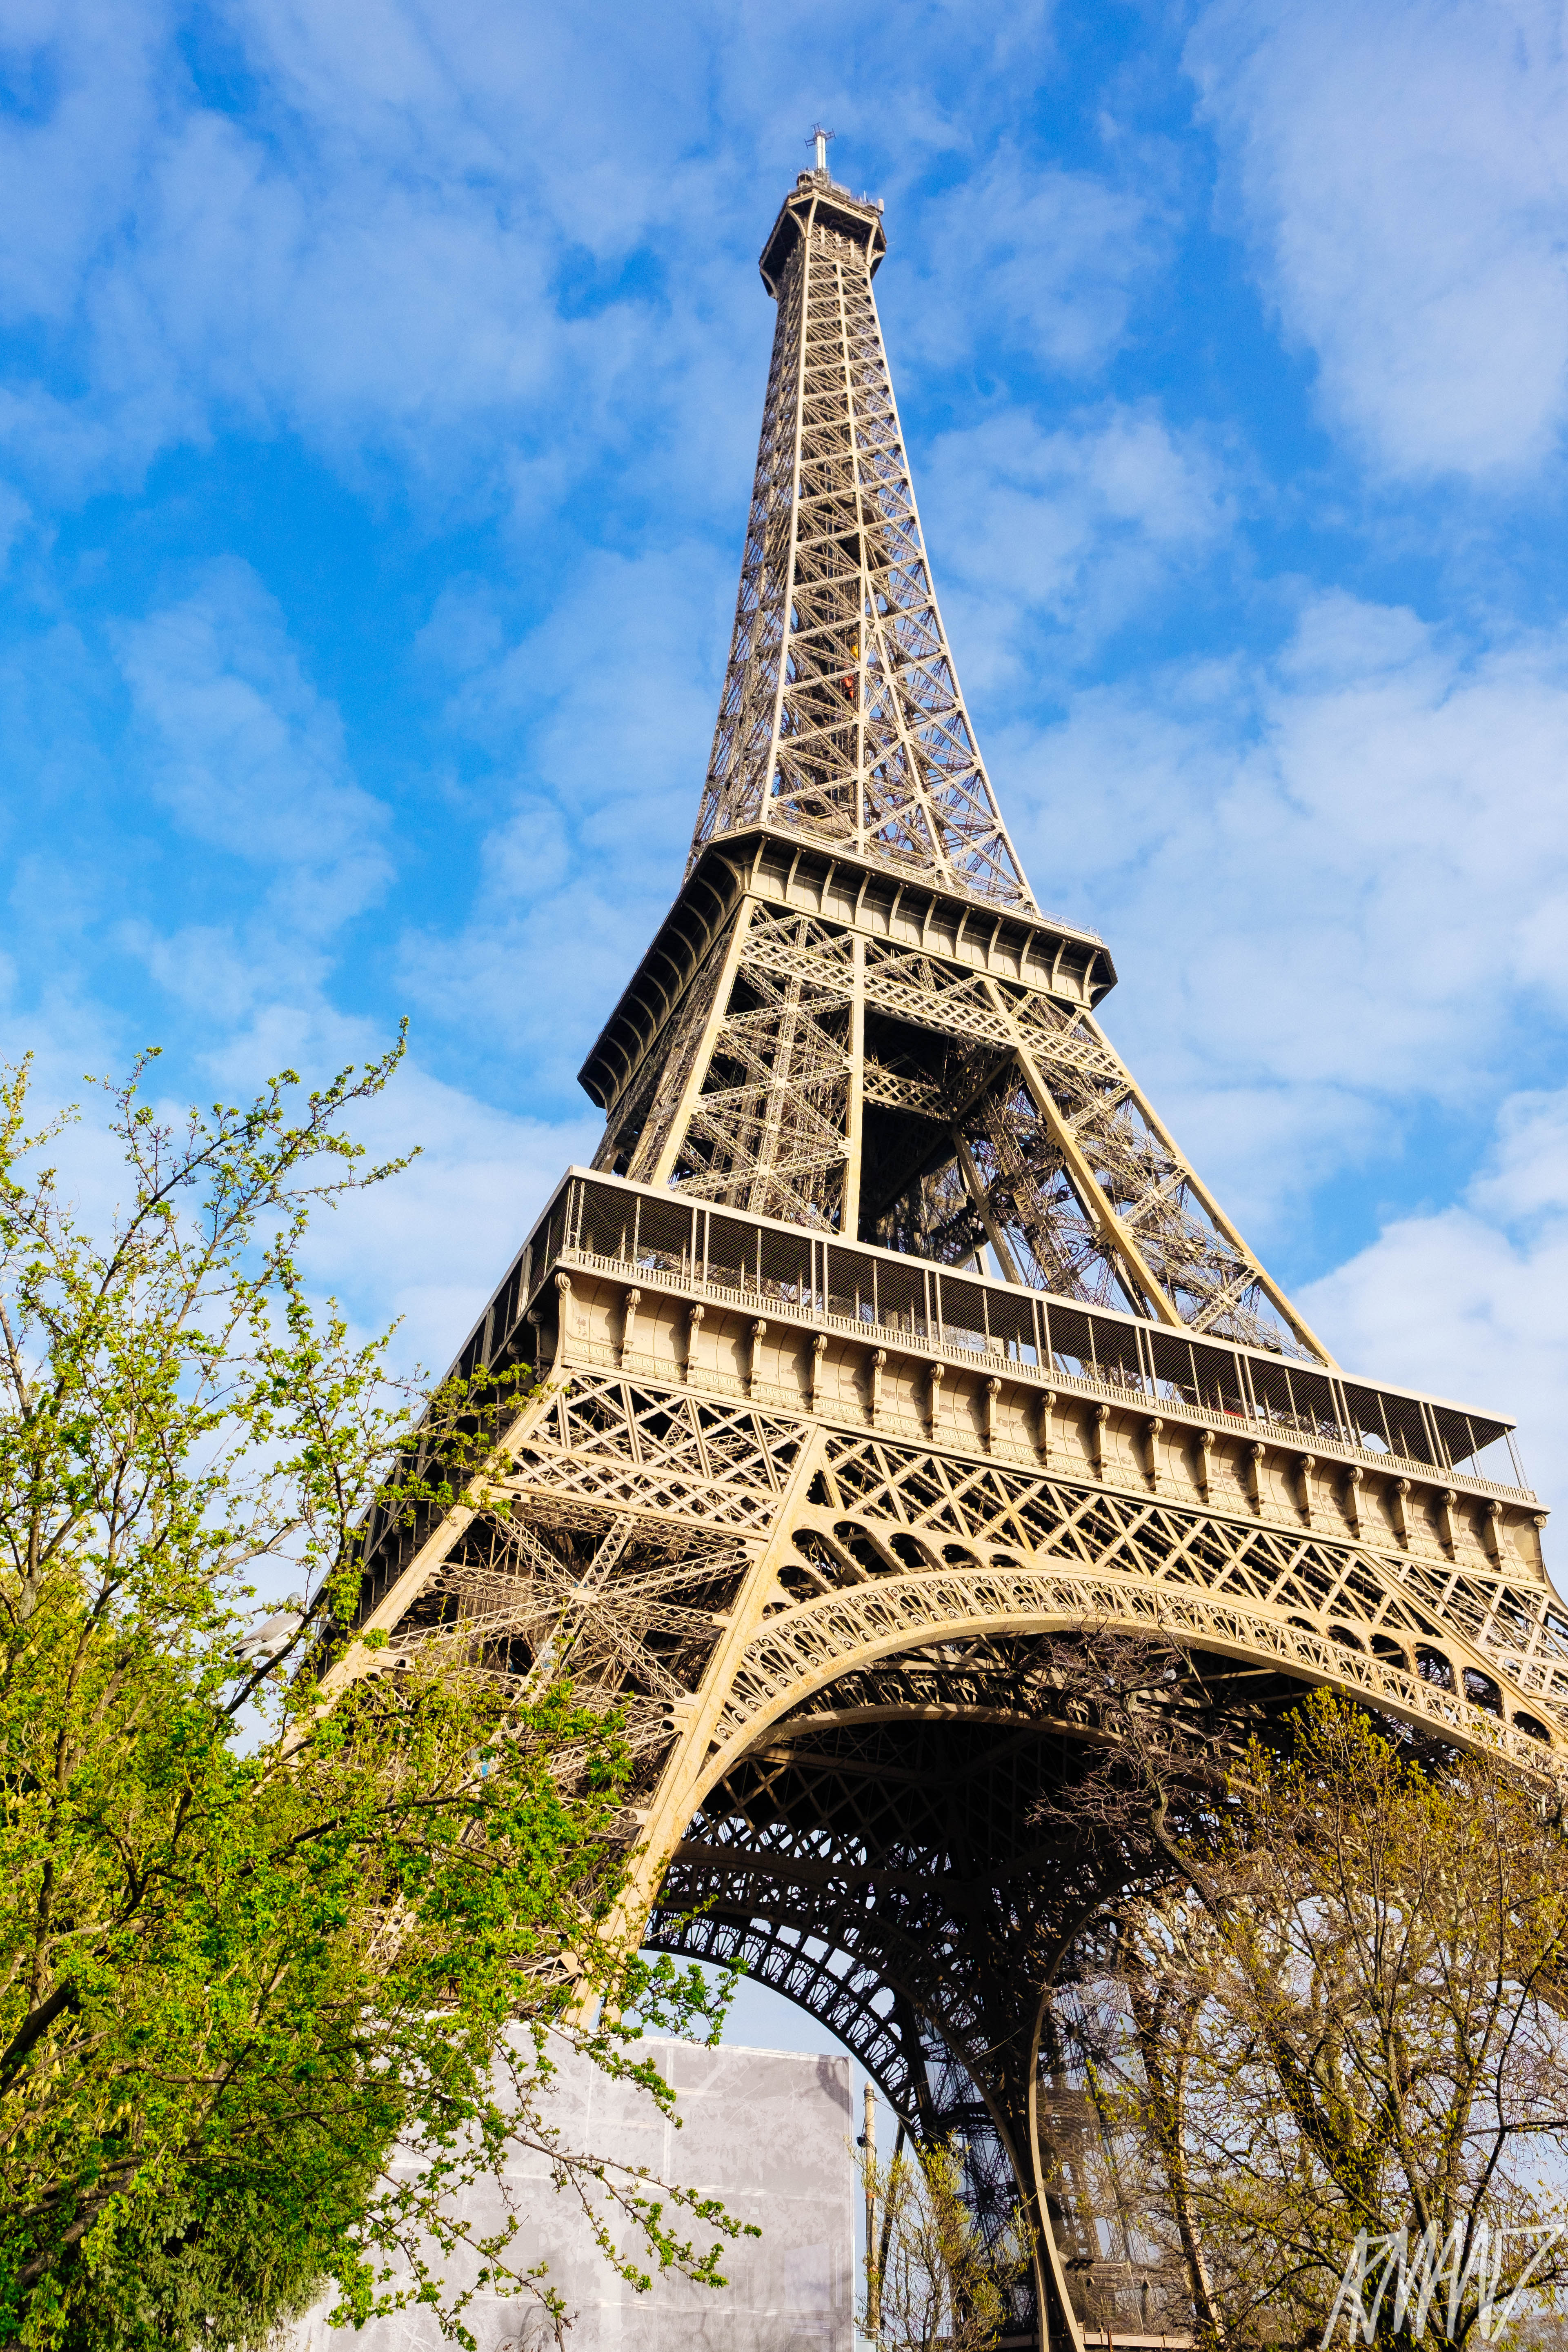 File:Eiffel Tower, Paris (47547377332).jpg - Wikimedia Commons